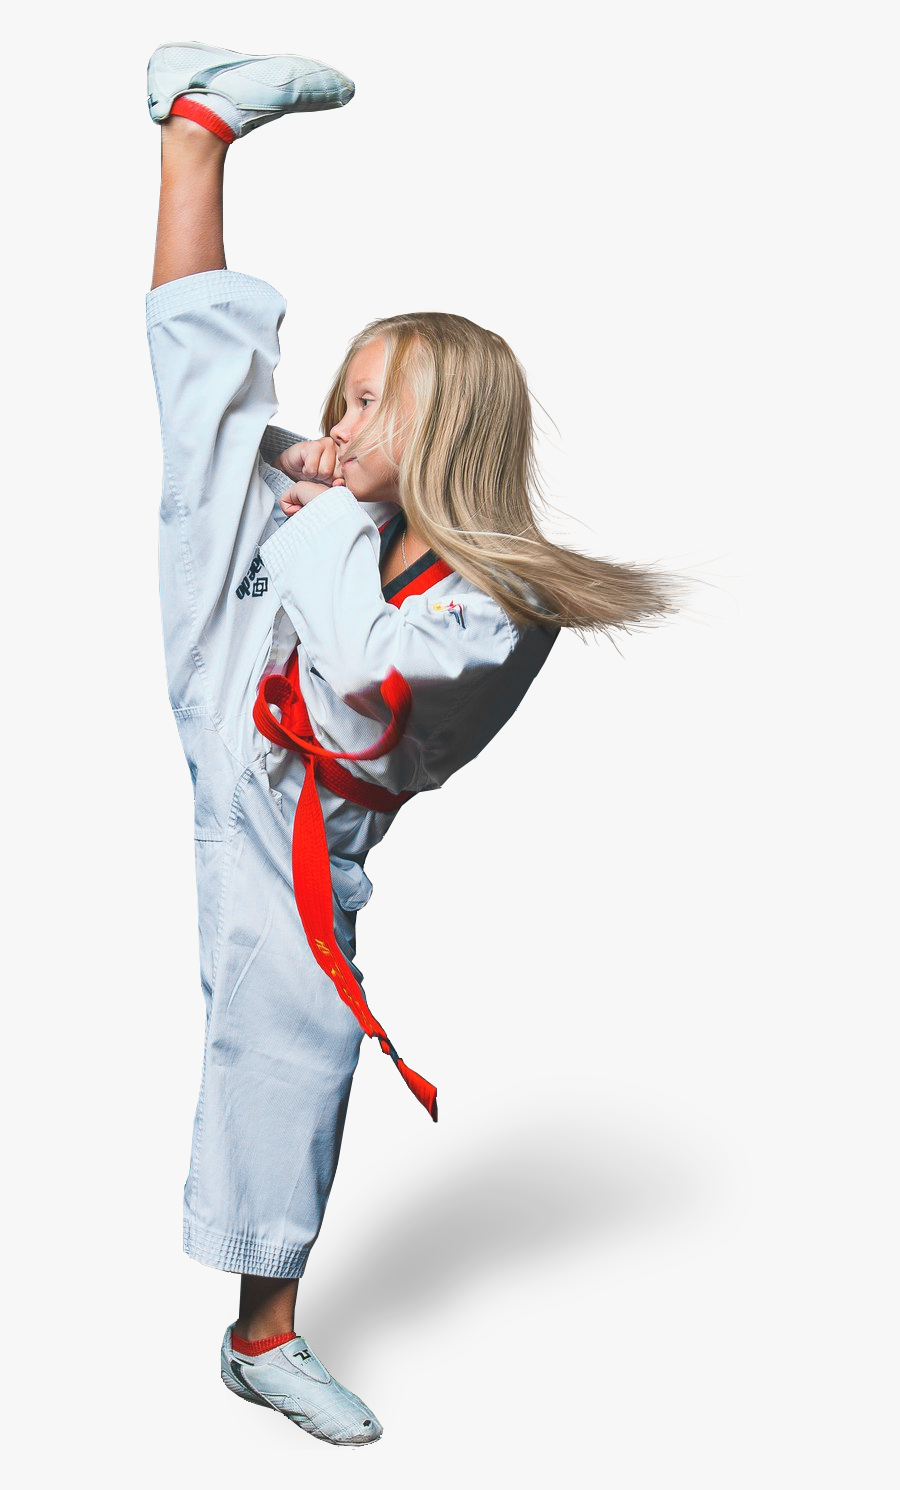 Taekwondo Png - Taekwondo Hd In Png, Transparent Clipart